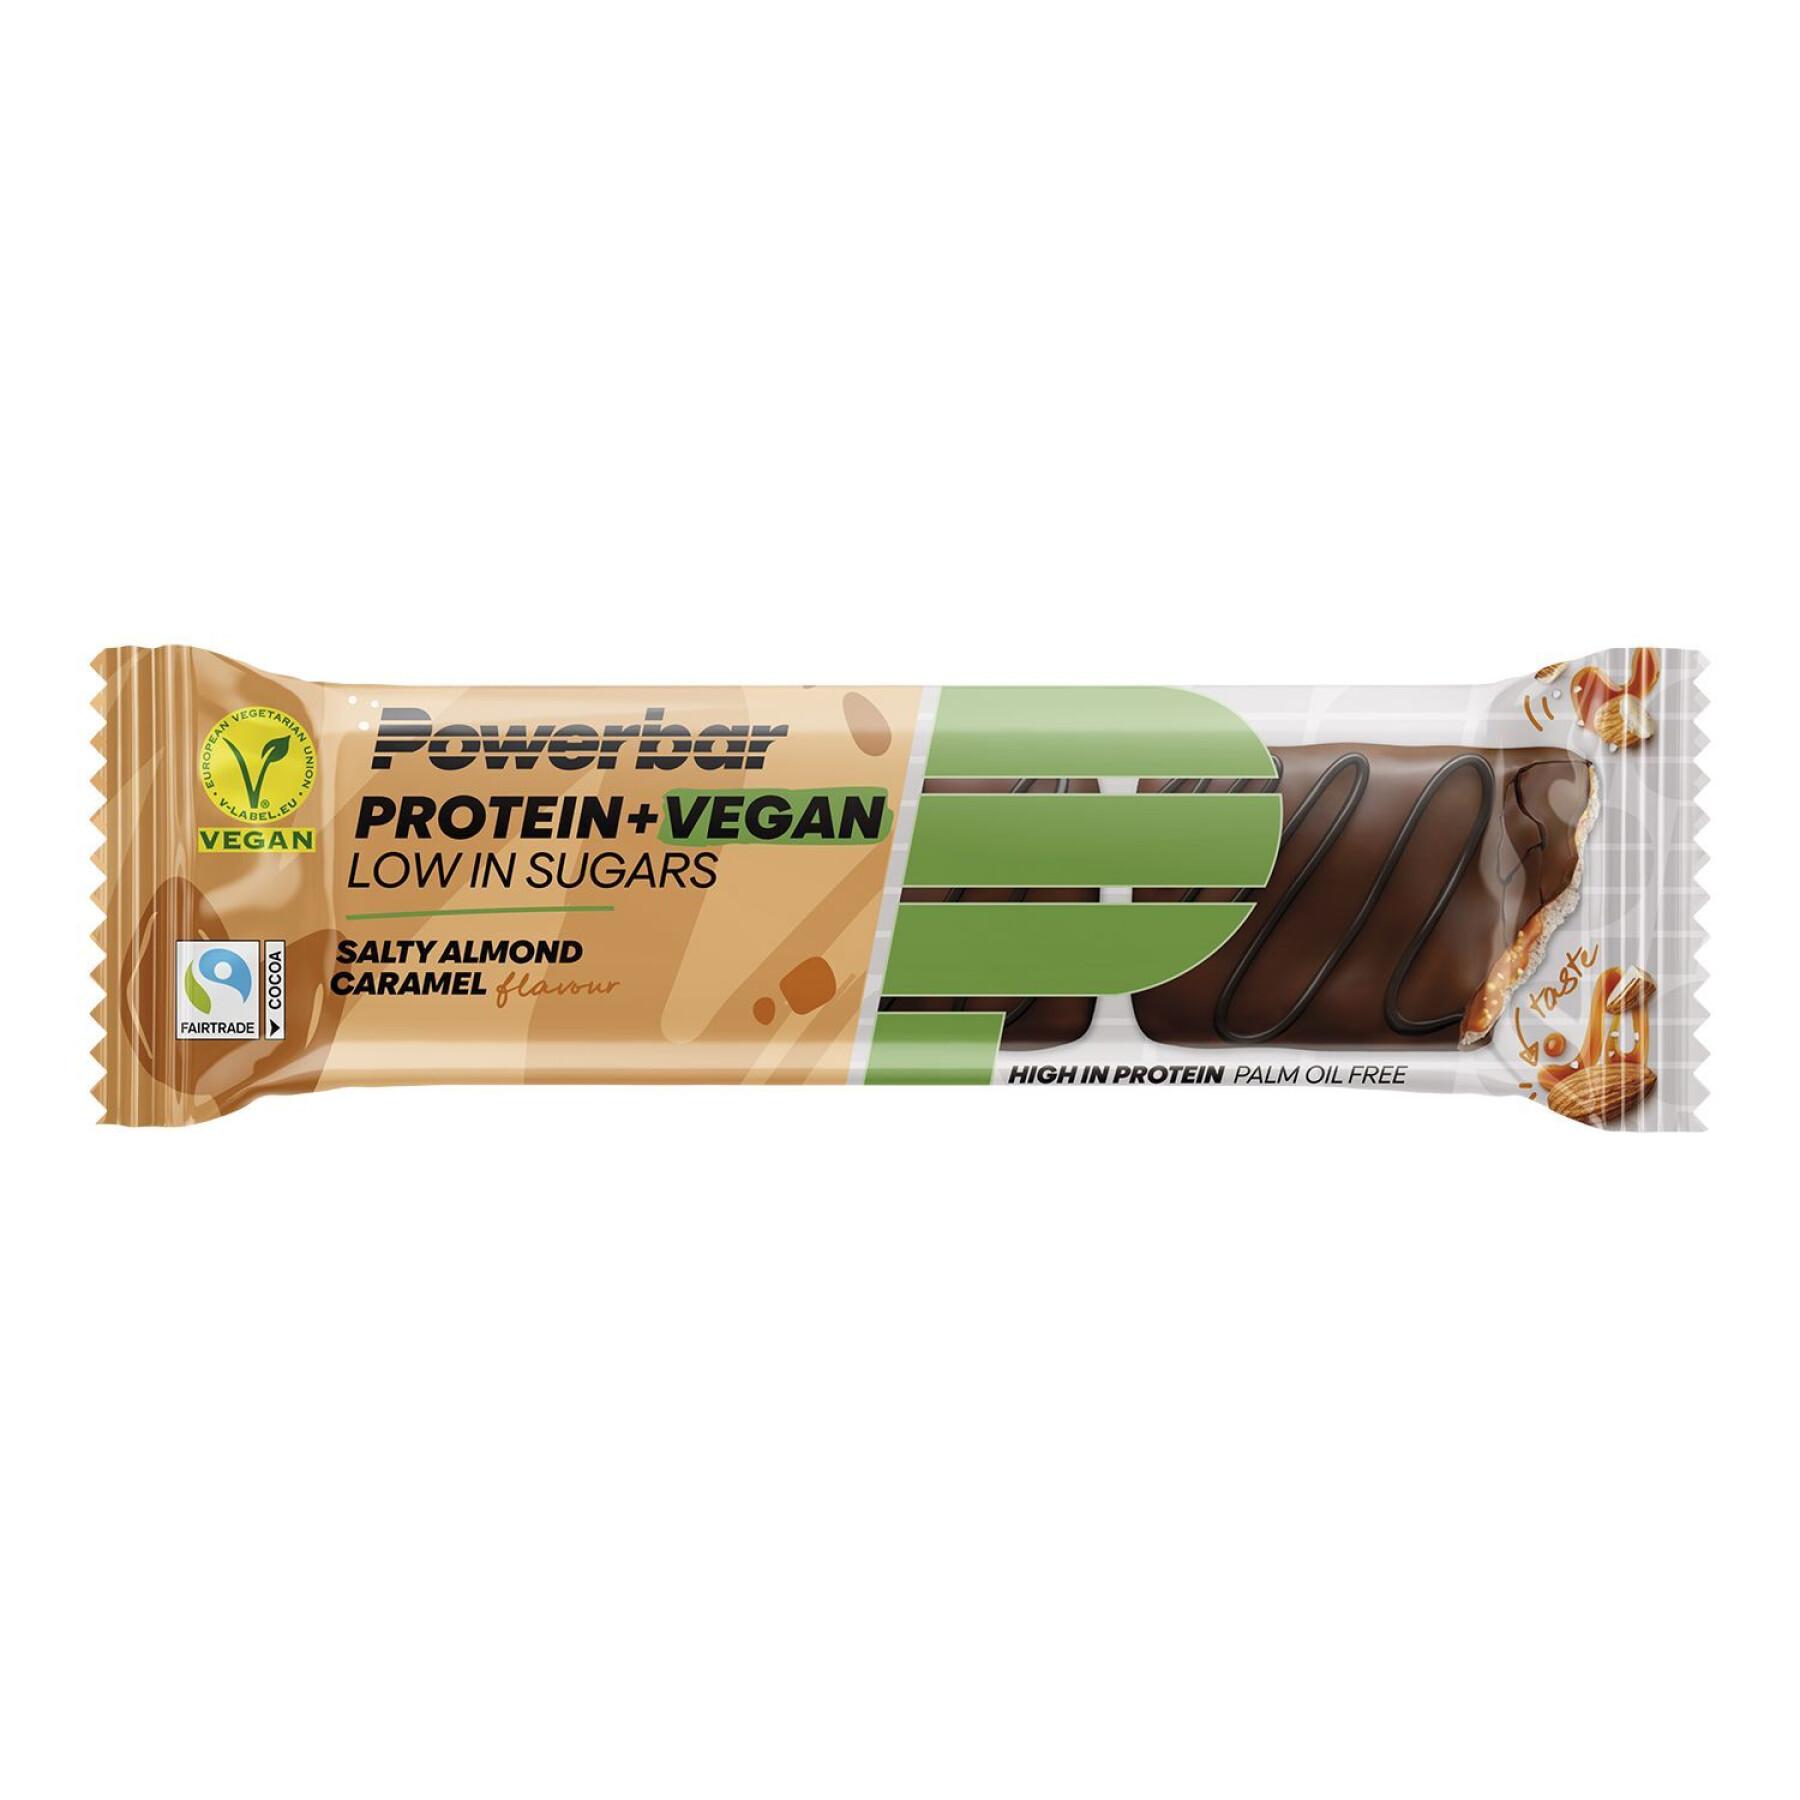 Barres PowerBar protéin et vegan